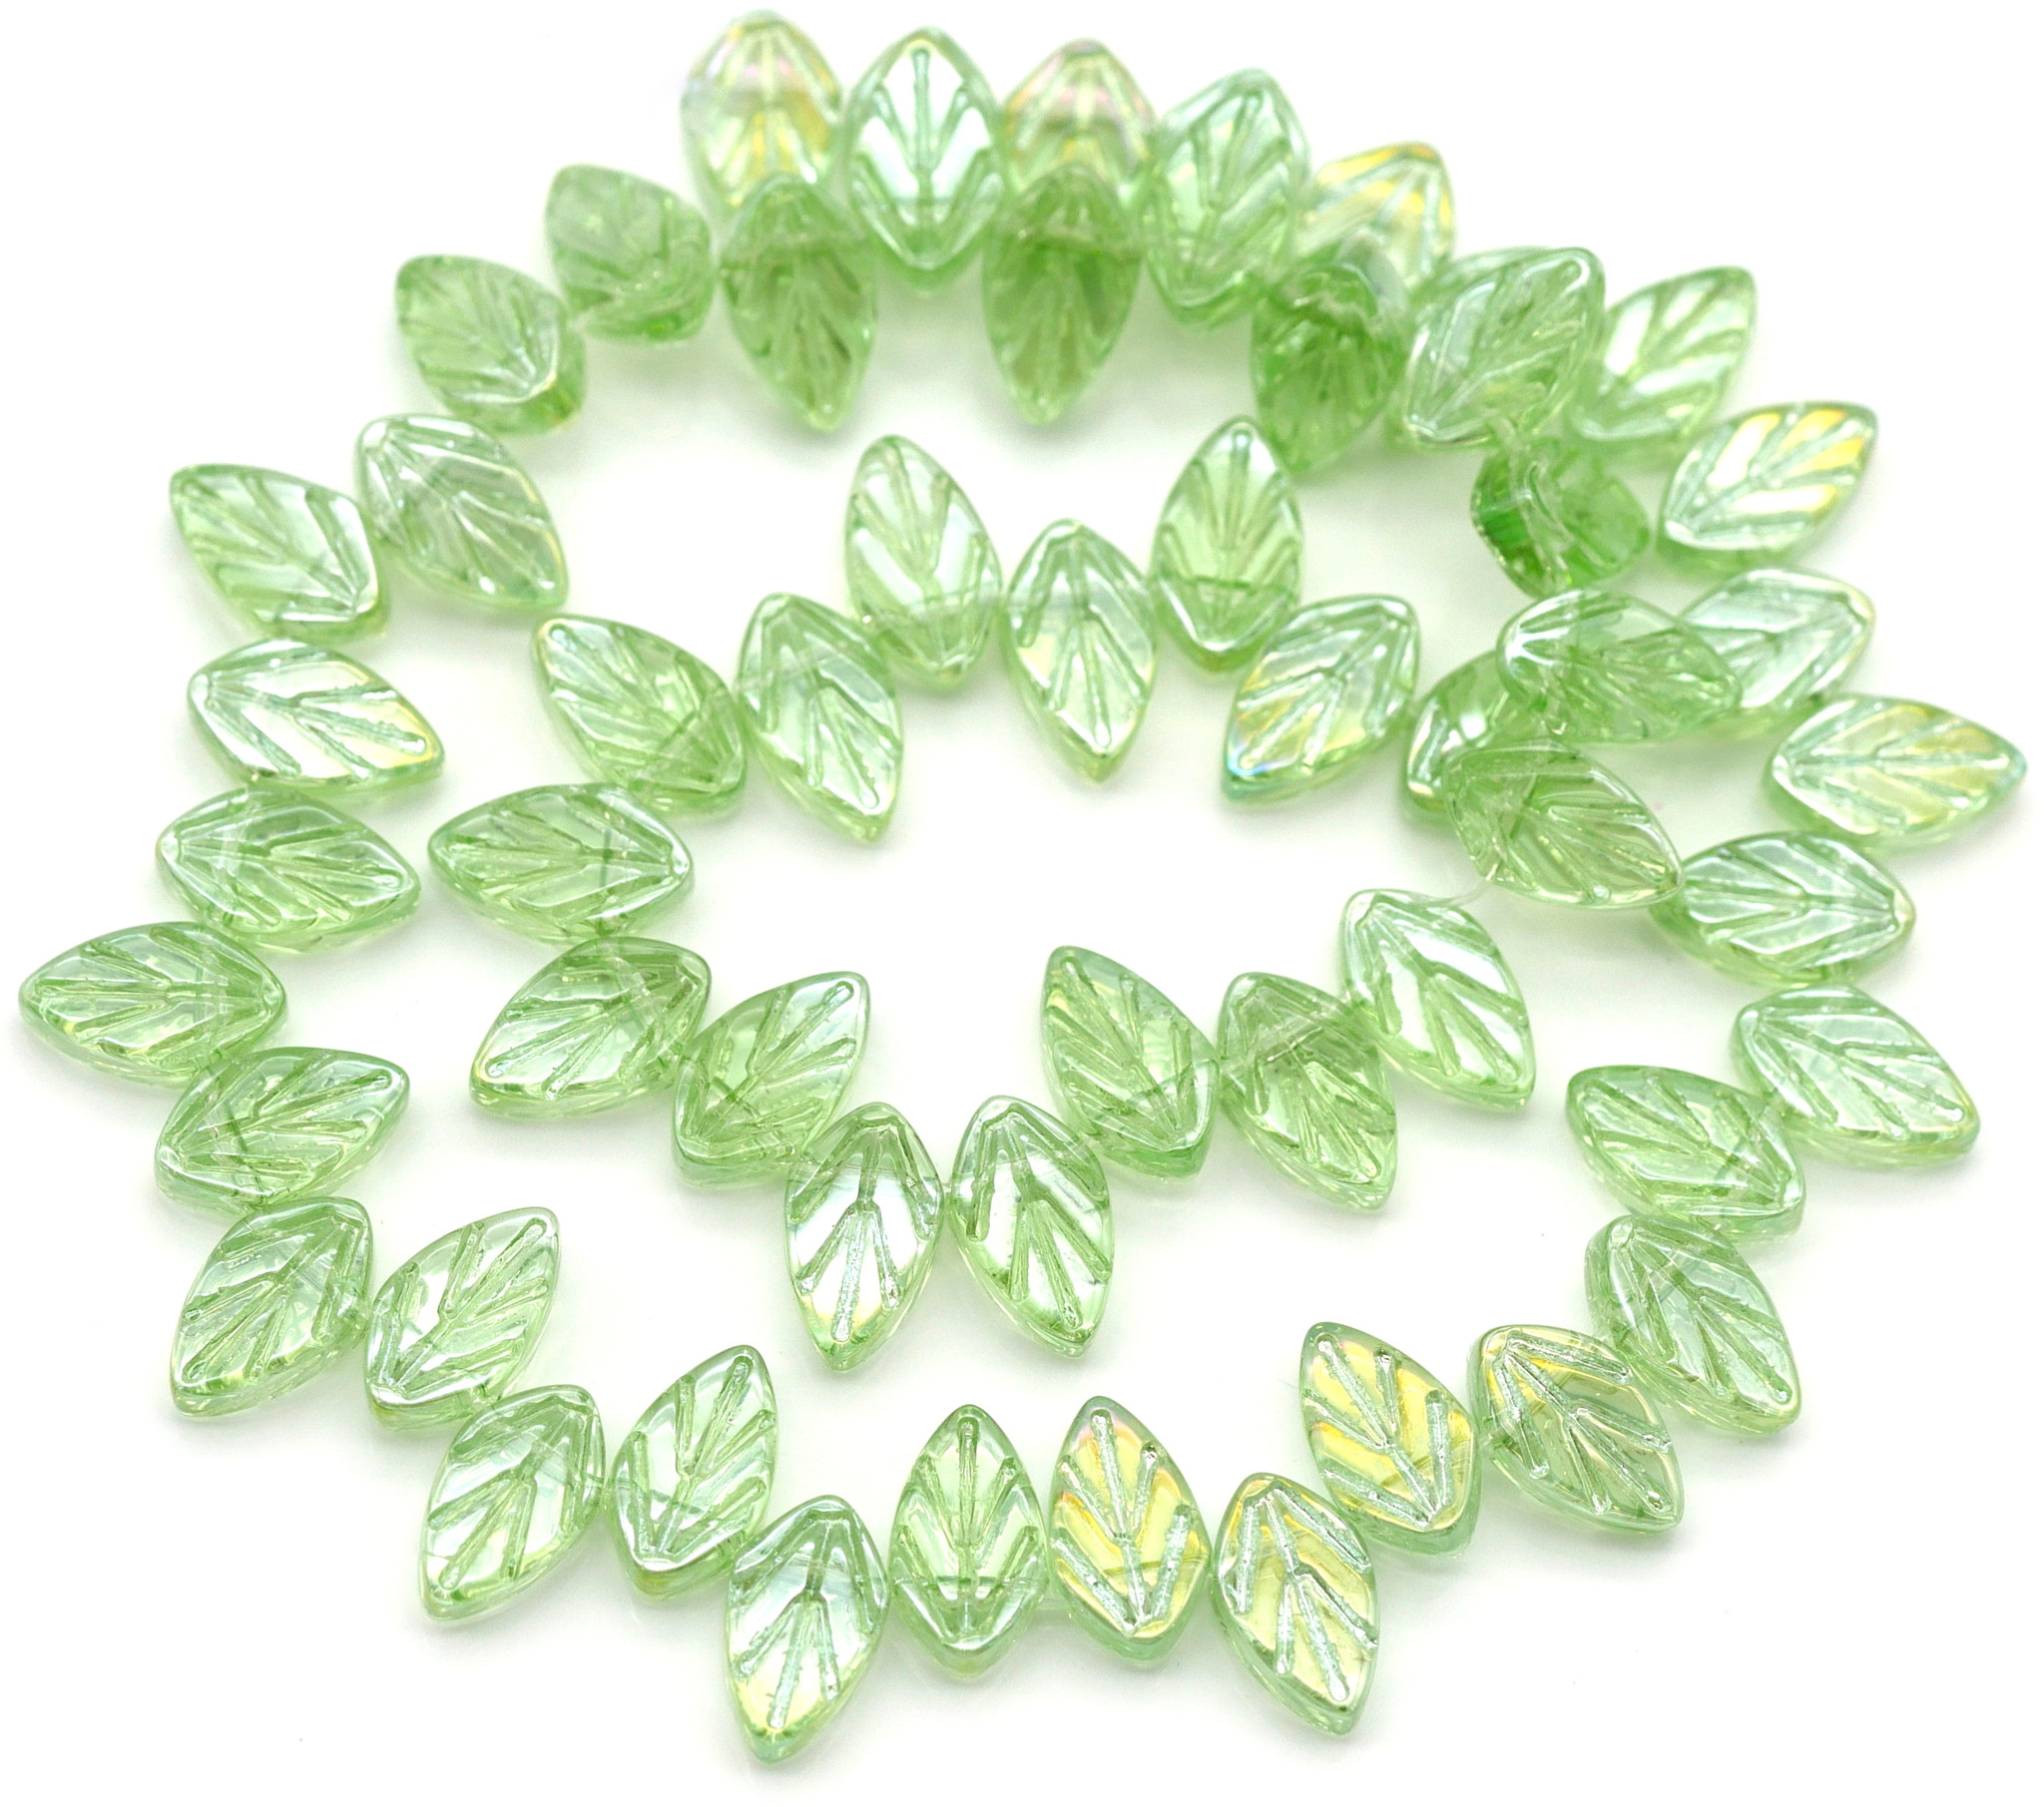 Approx. 13 Strand 7x11mm Pressed Glass Leaf Beads, Peridot AB